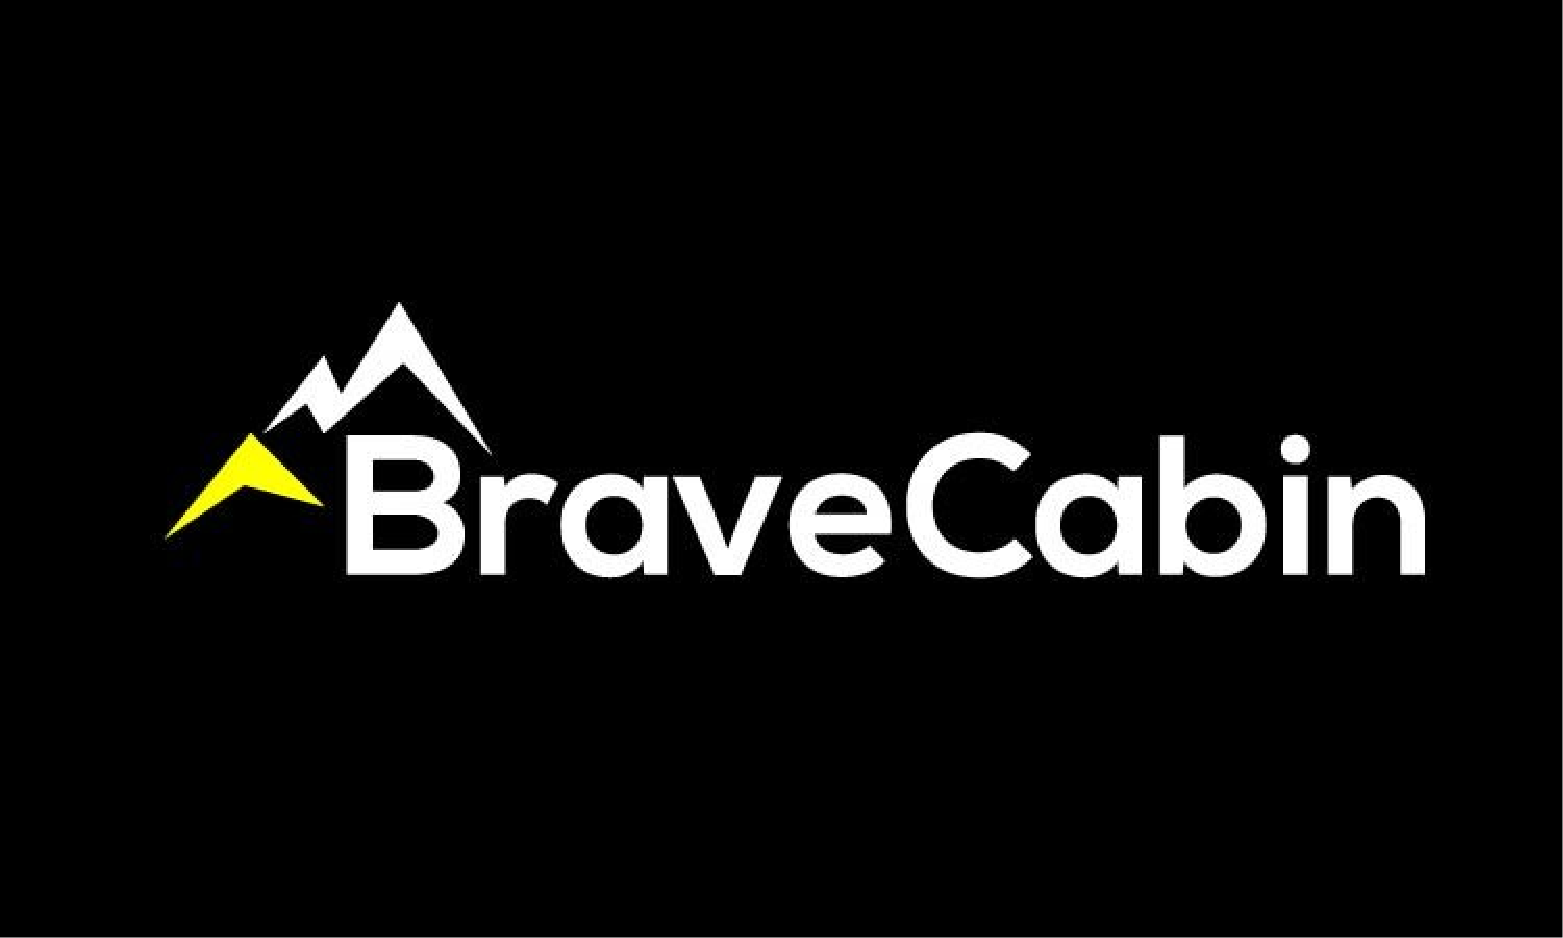 BraveCabin.com - Creative brandable domain for sale